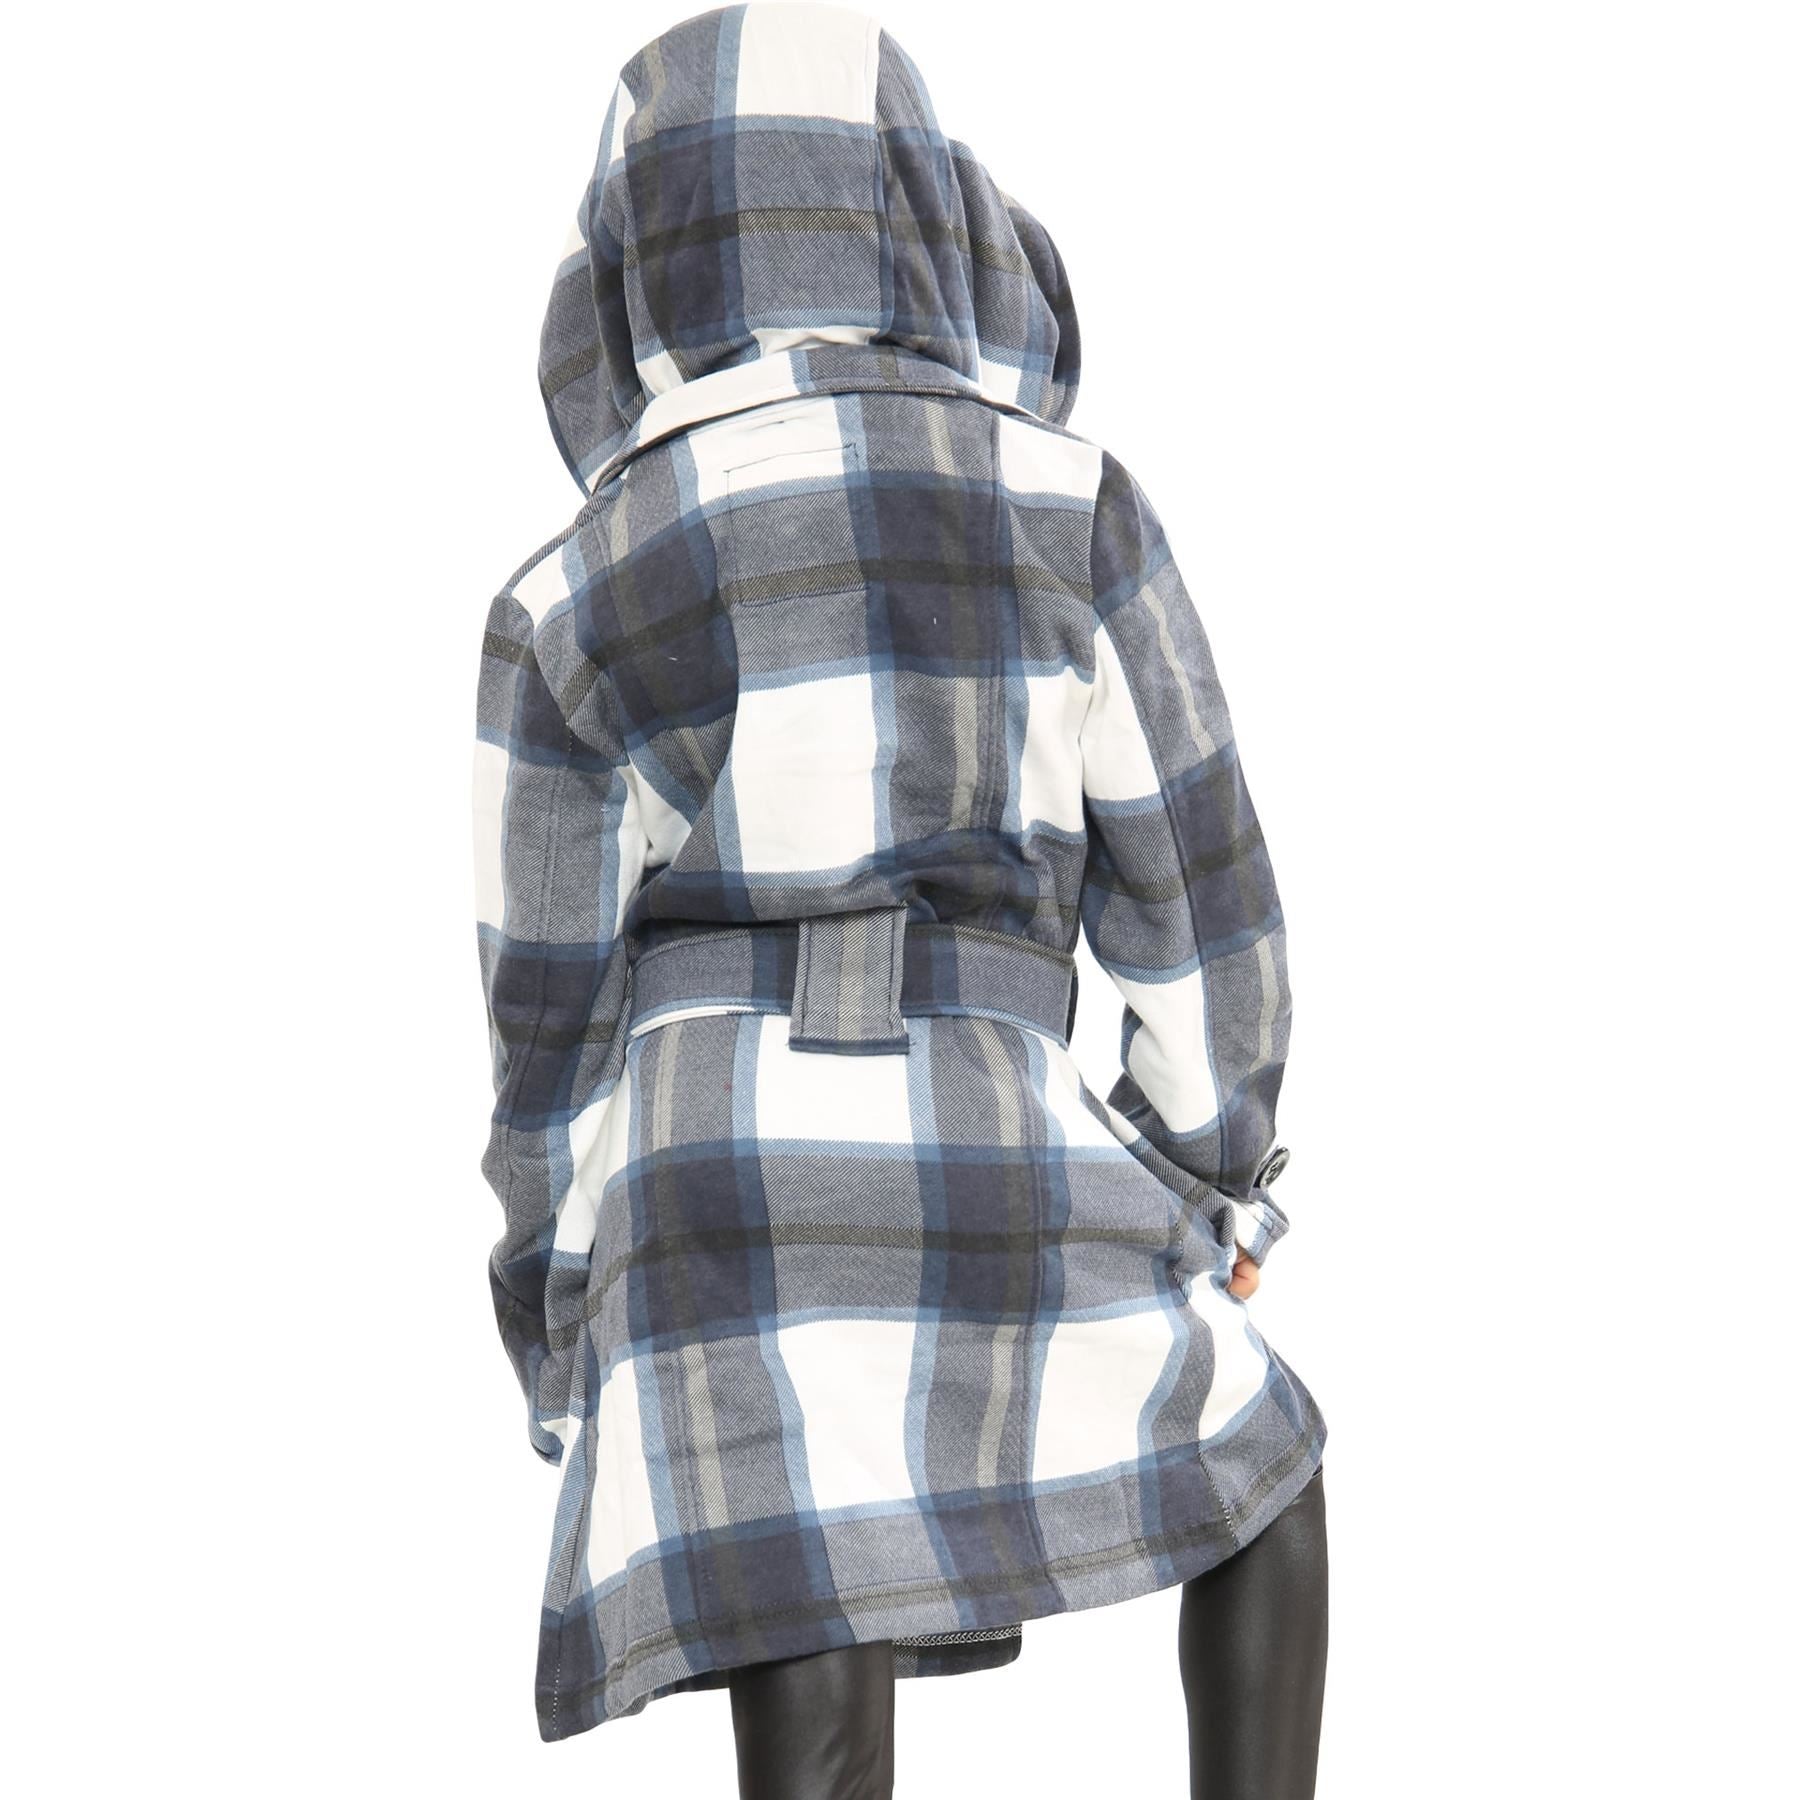 Kids Girls Overcoats Hooded Trench Coats Lapels Navy Check Long Parka Jackets